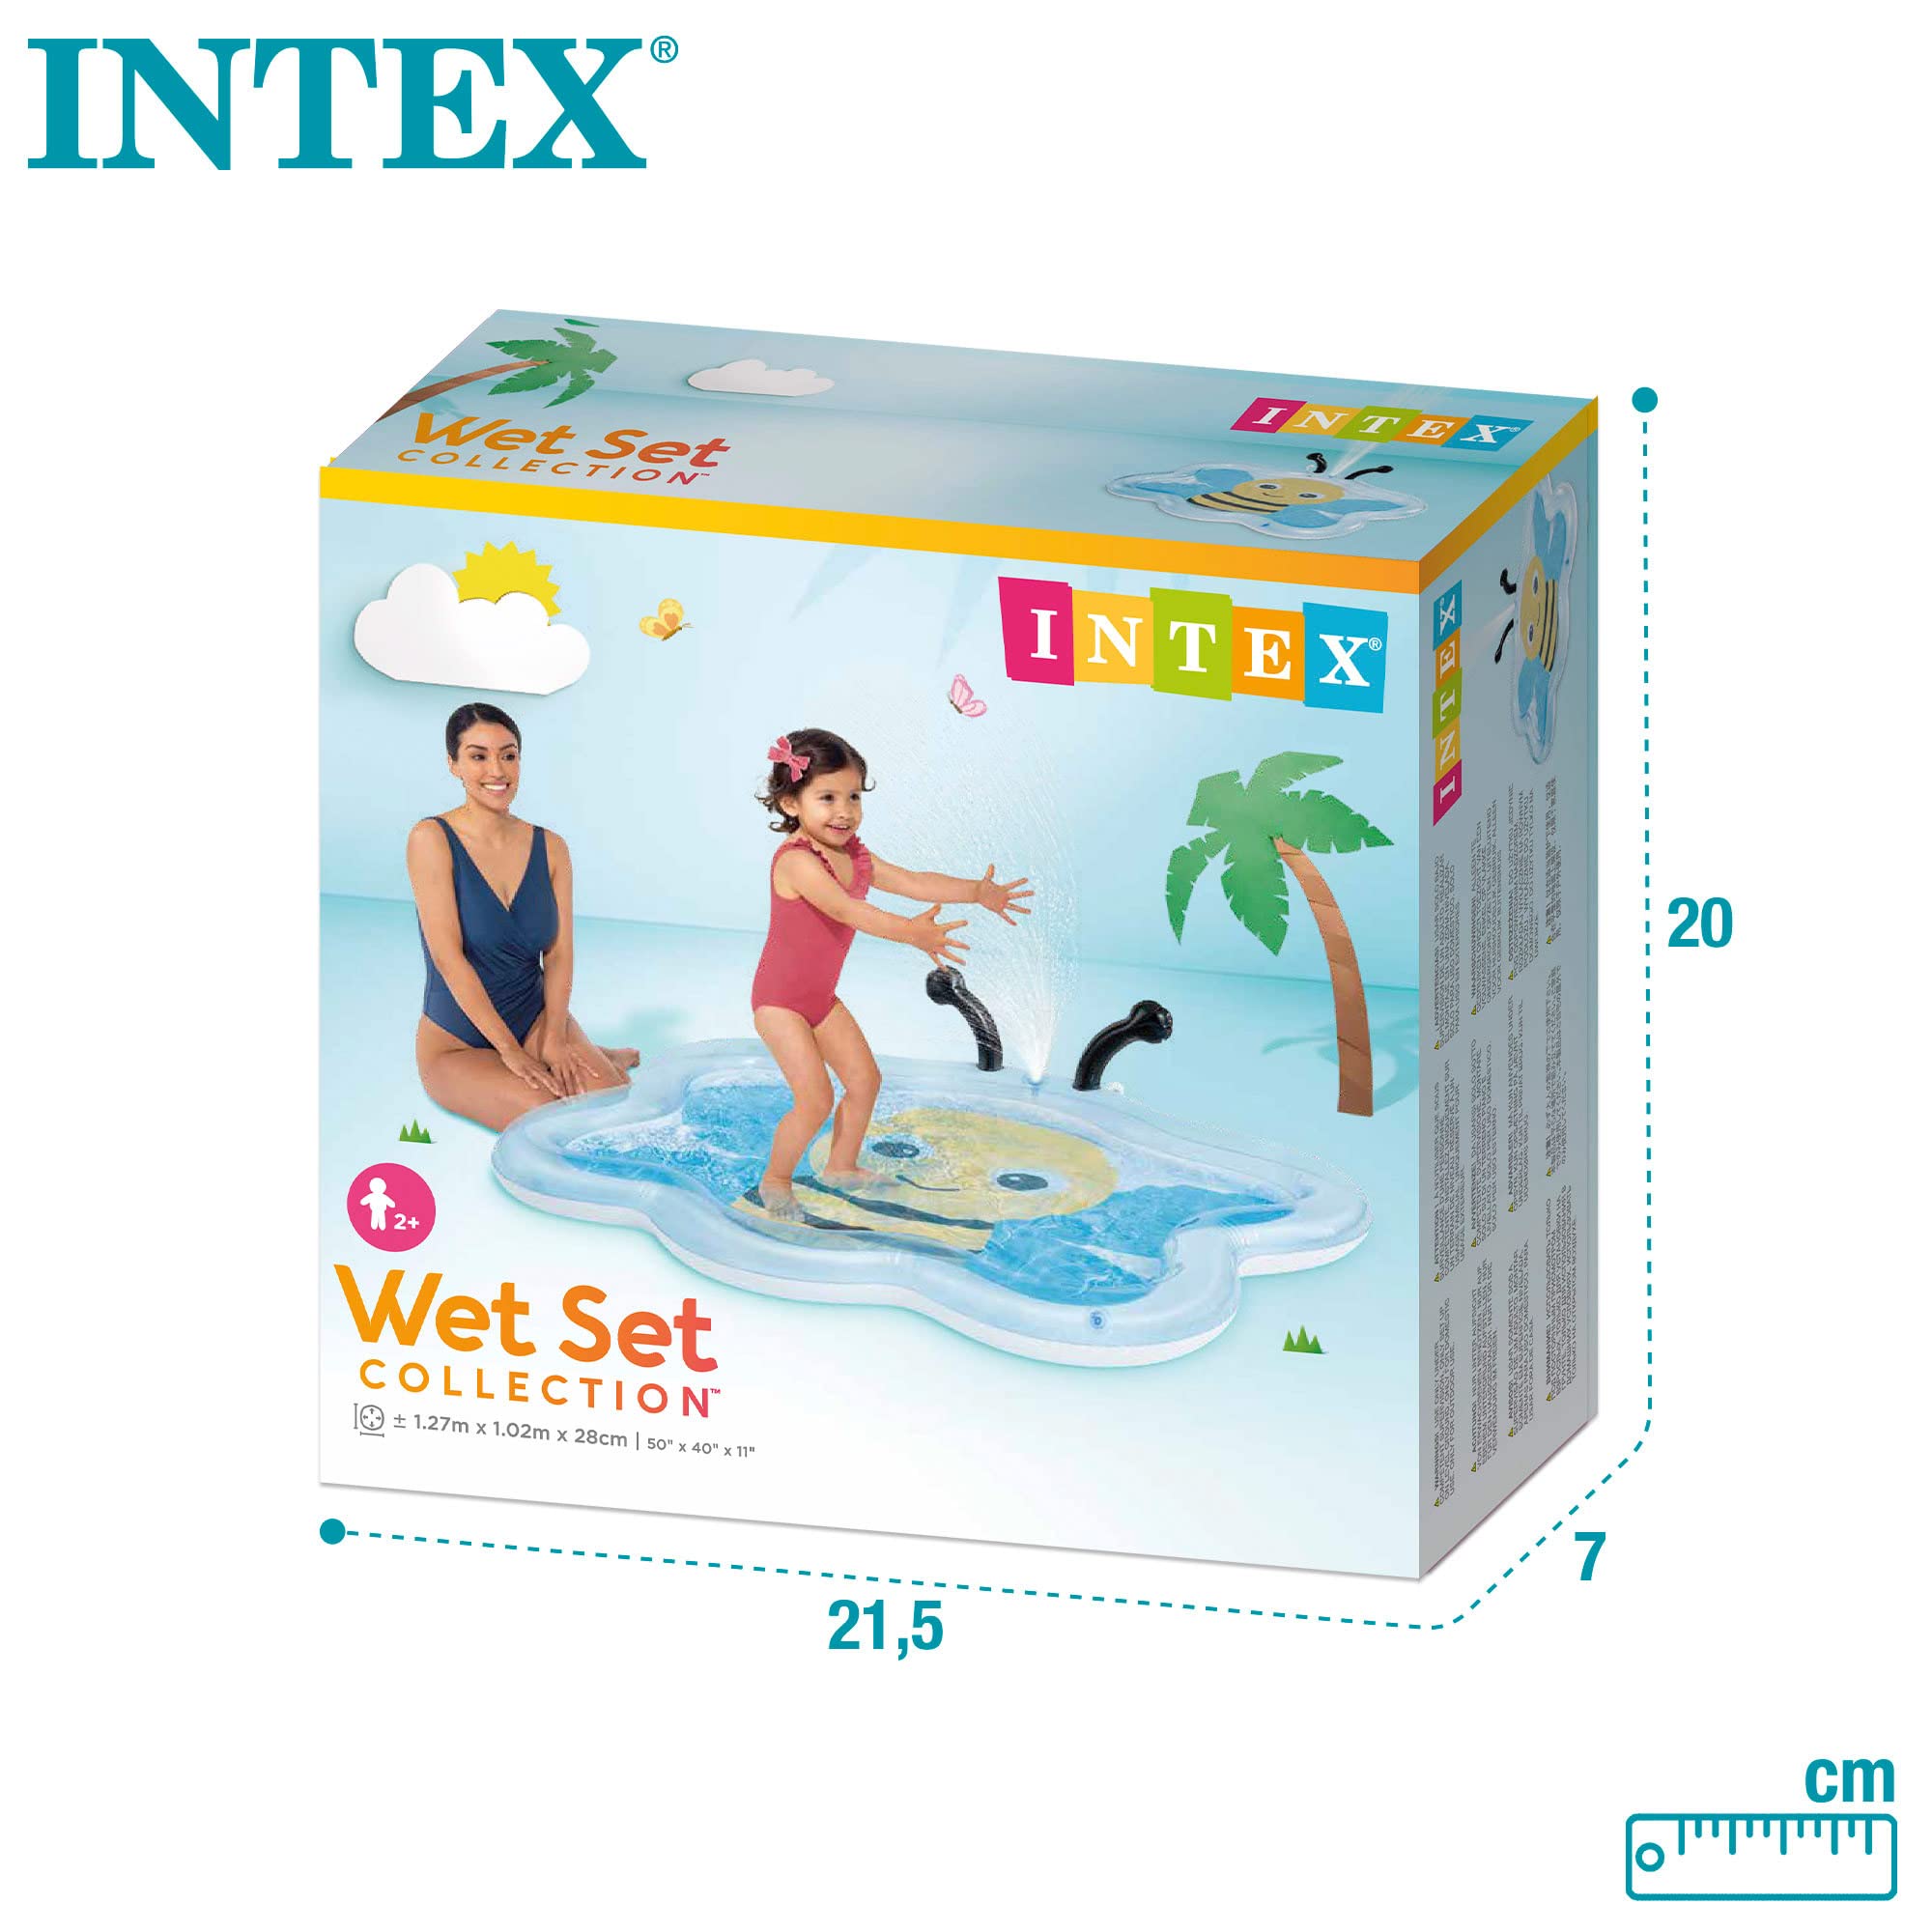 Intex piscinette Fontaine Abeille Multicolore